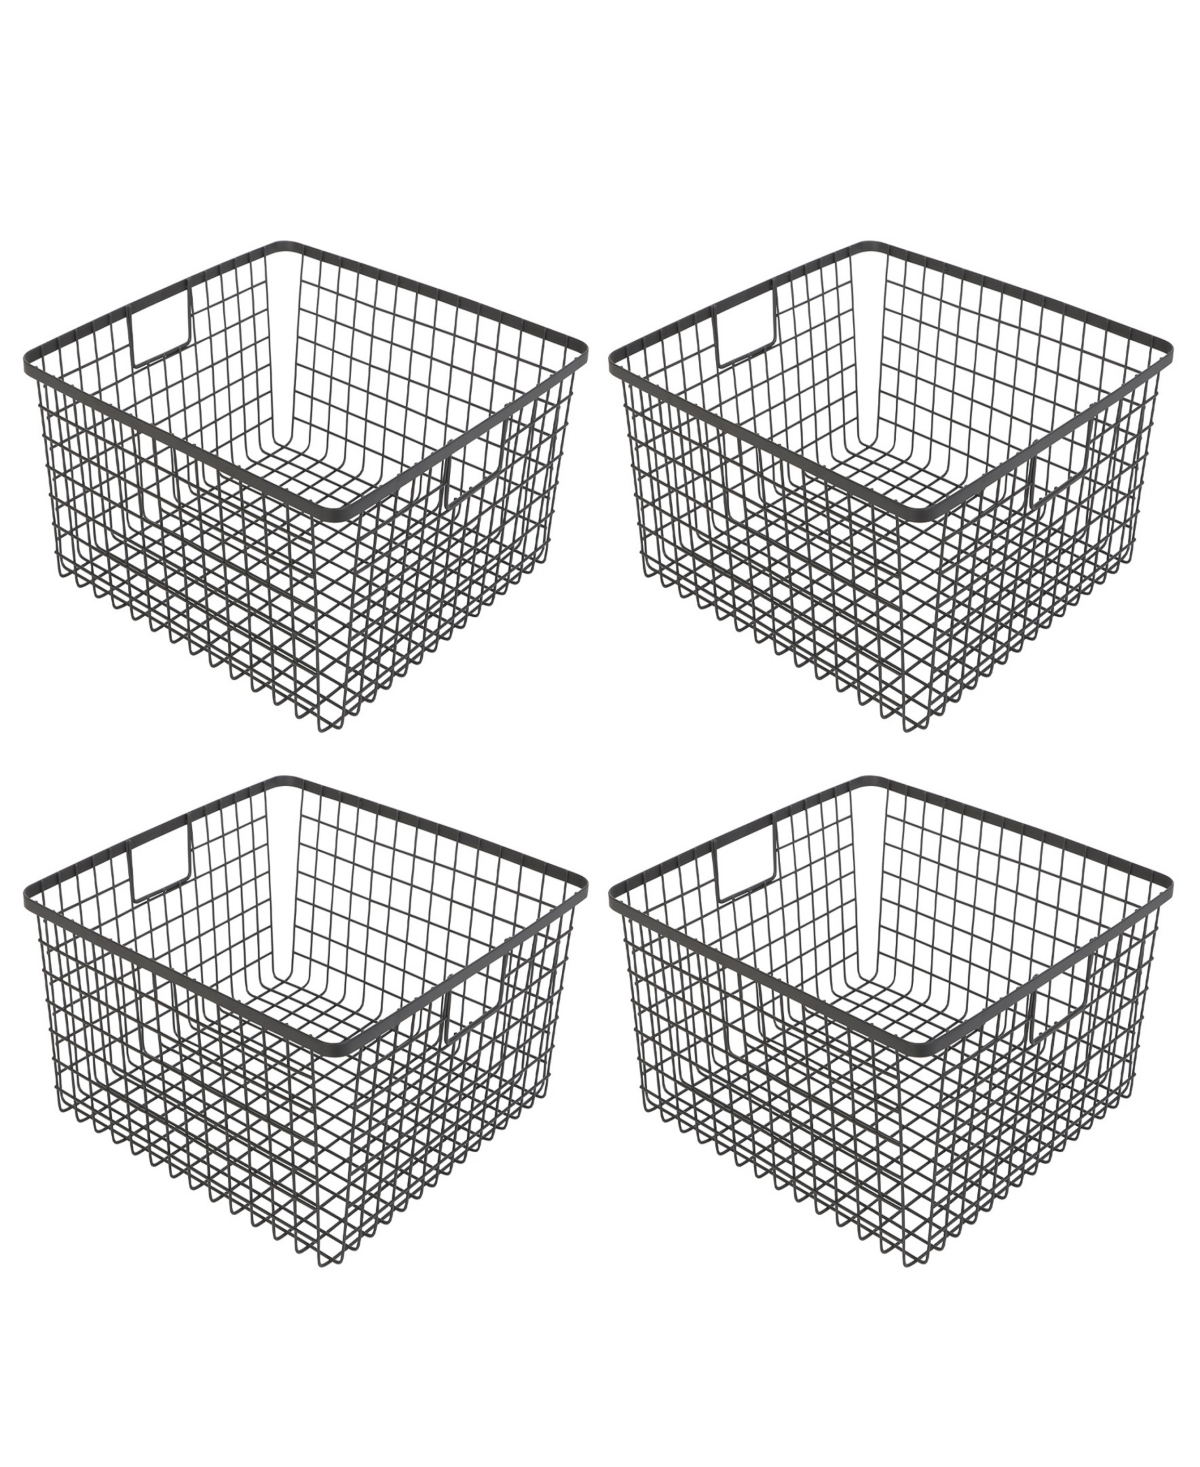 Nestable 9" x 16" x 6" Basket Organizer with Handles, Set of 4 - Black